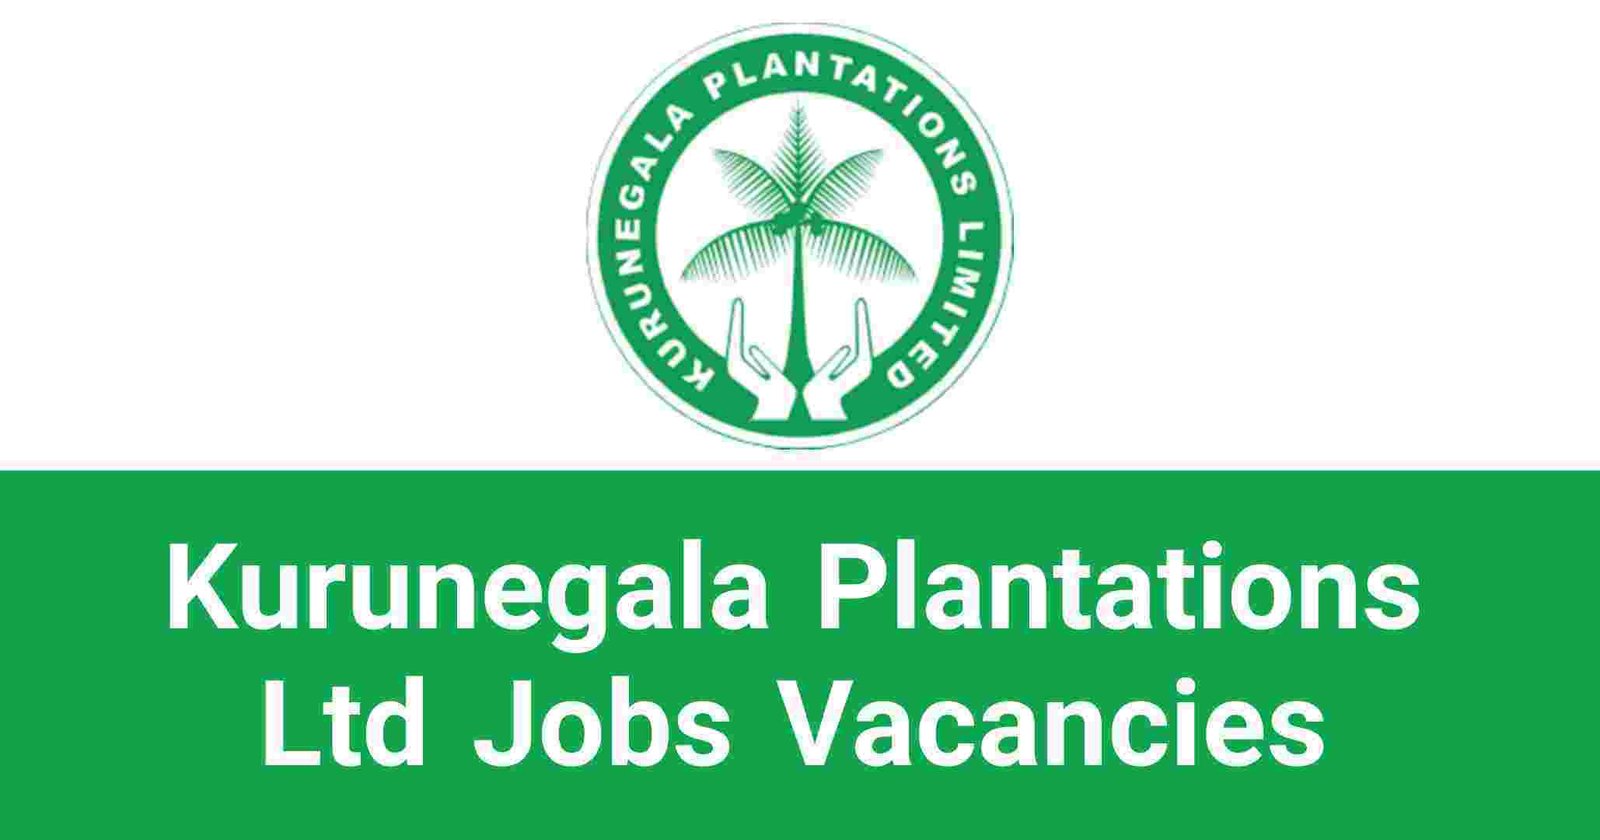 Kurunegala Plantations Ltd Jobs Vacancies